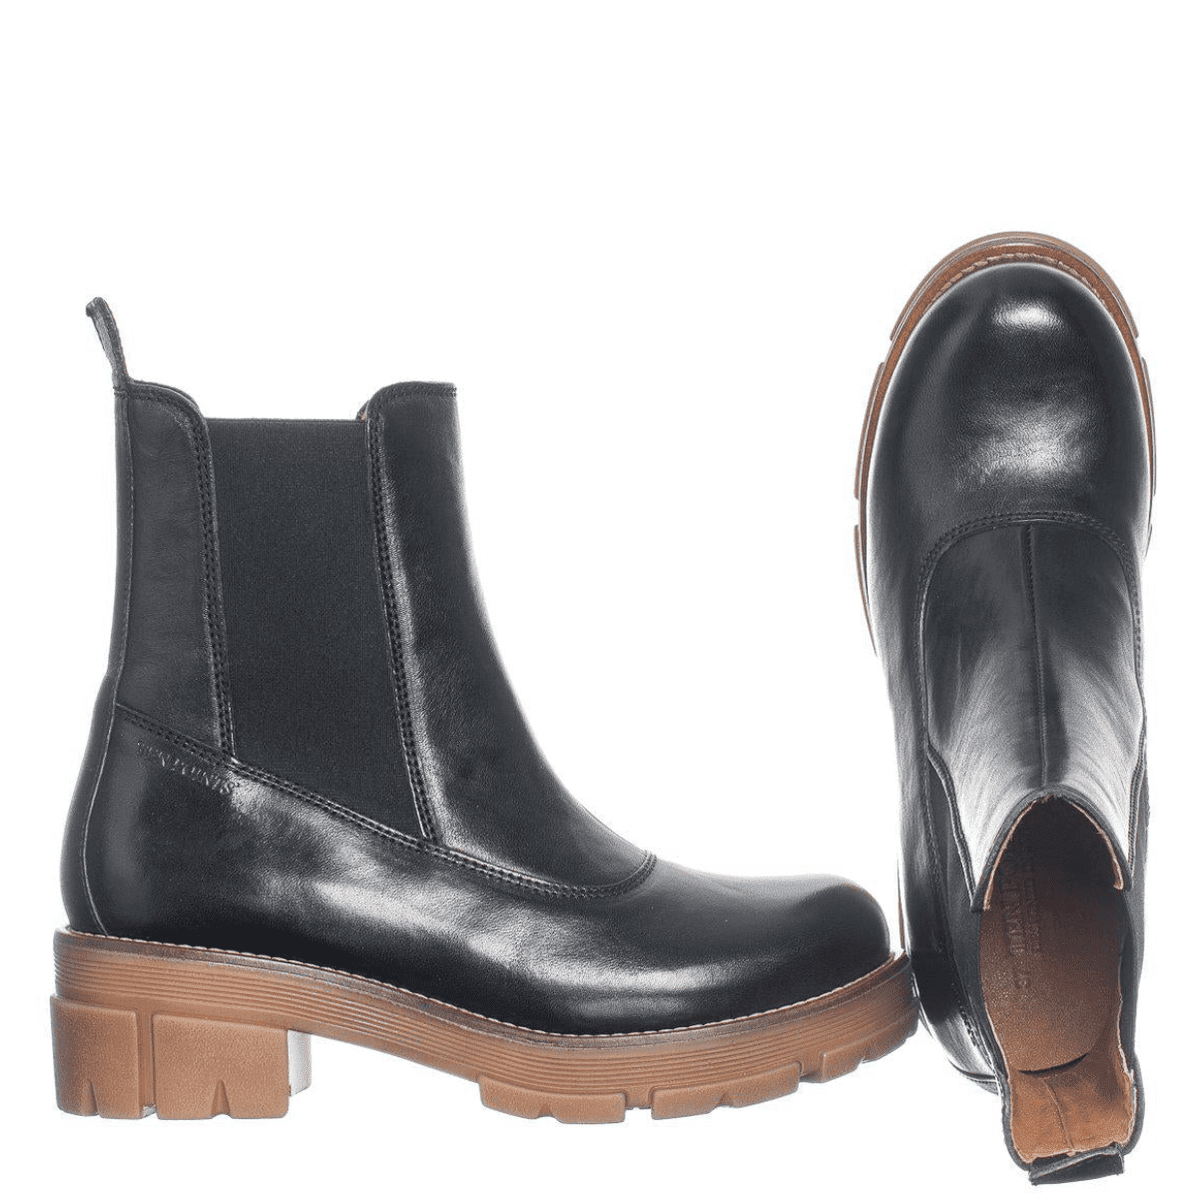 Leather Chelsea boots, Cecilia